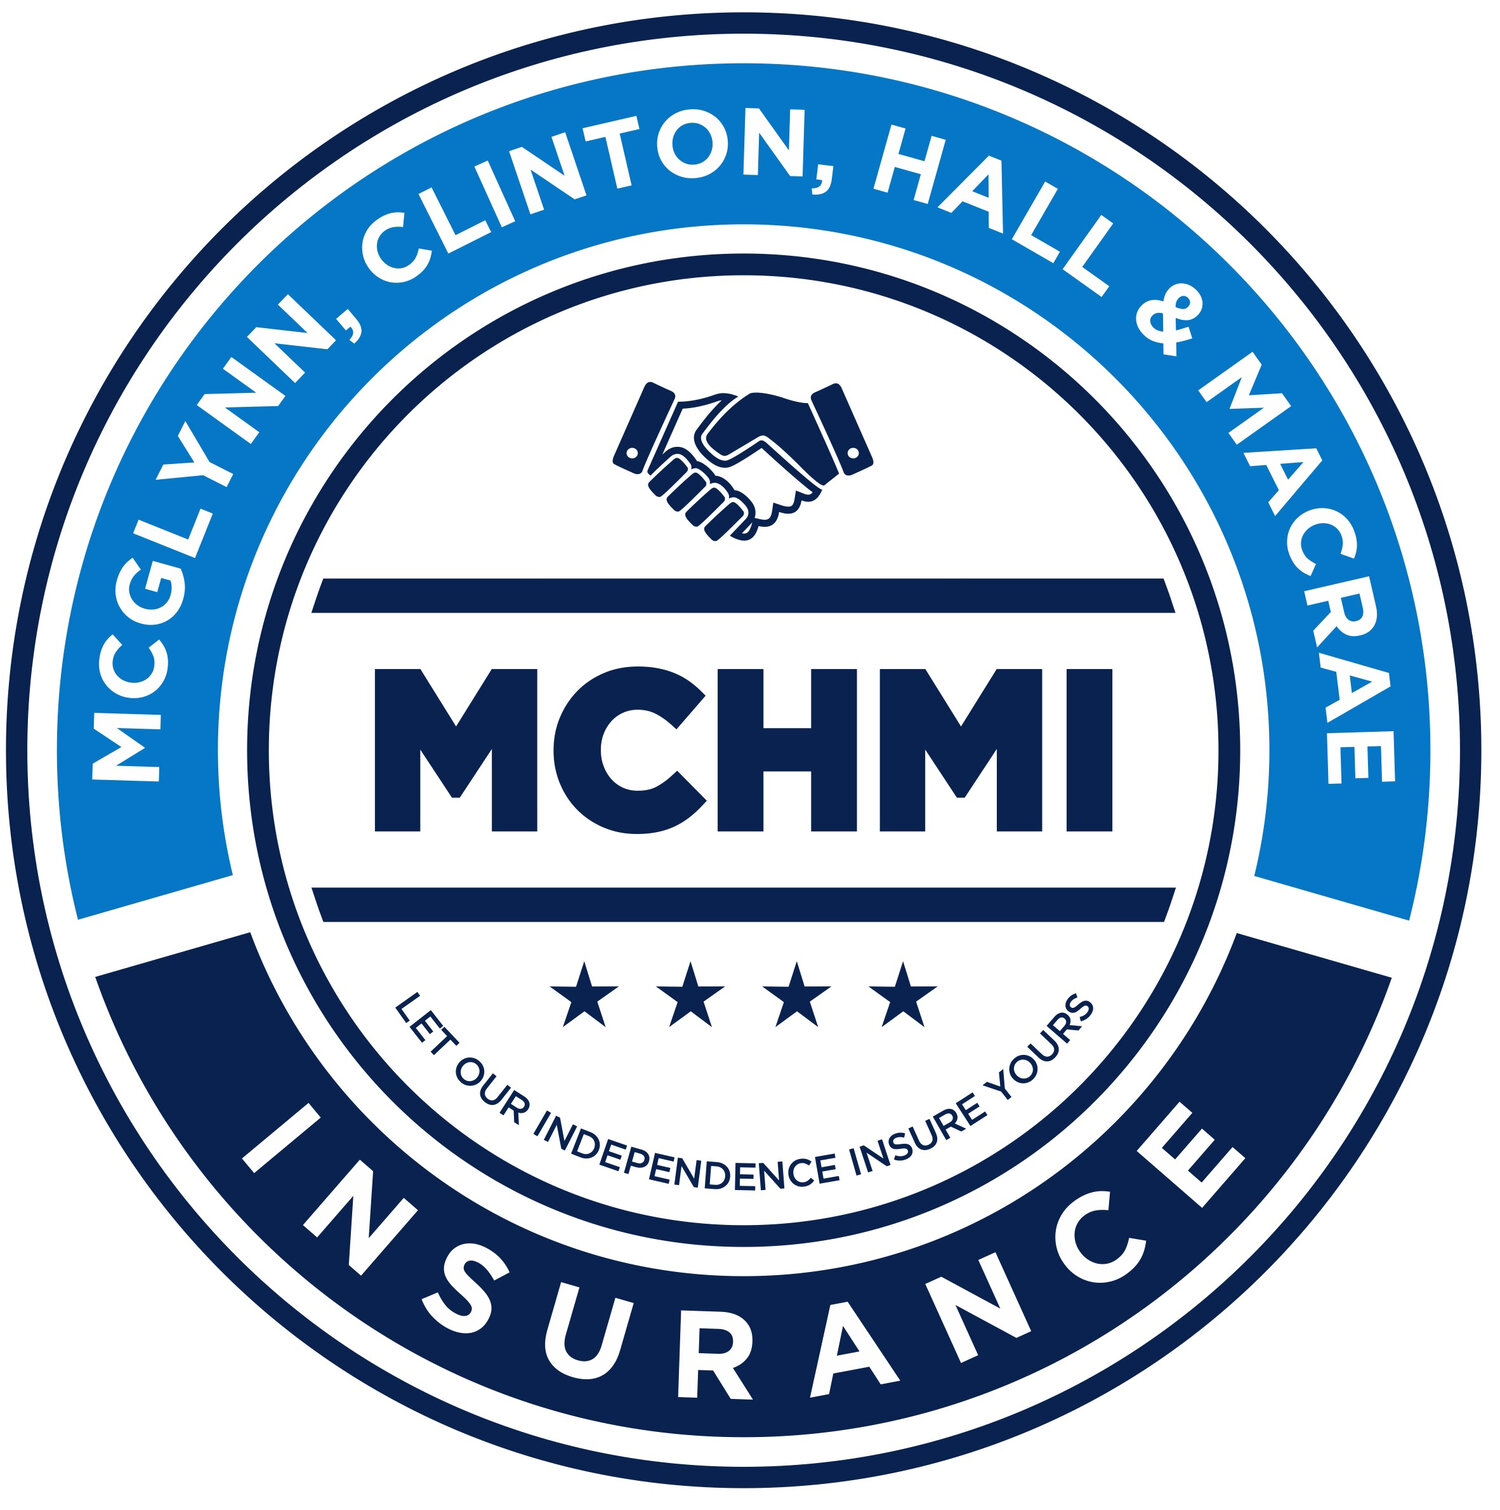 McGlynn, Clinton, Hall & MacRae Insurance Agencies Icon